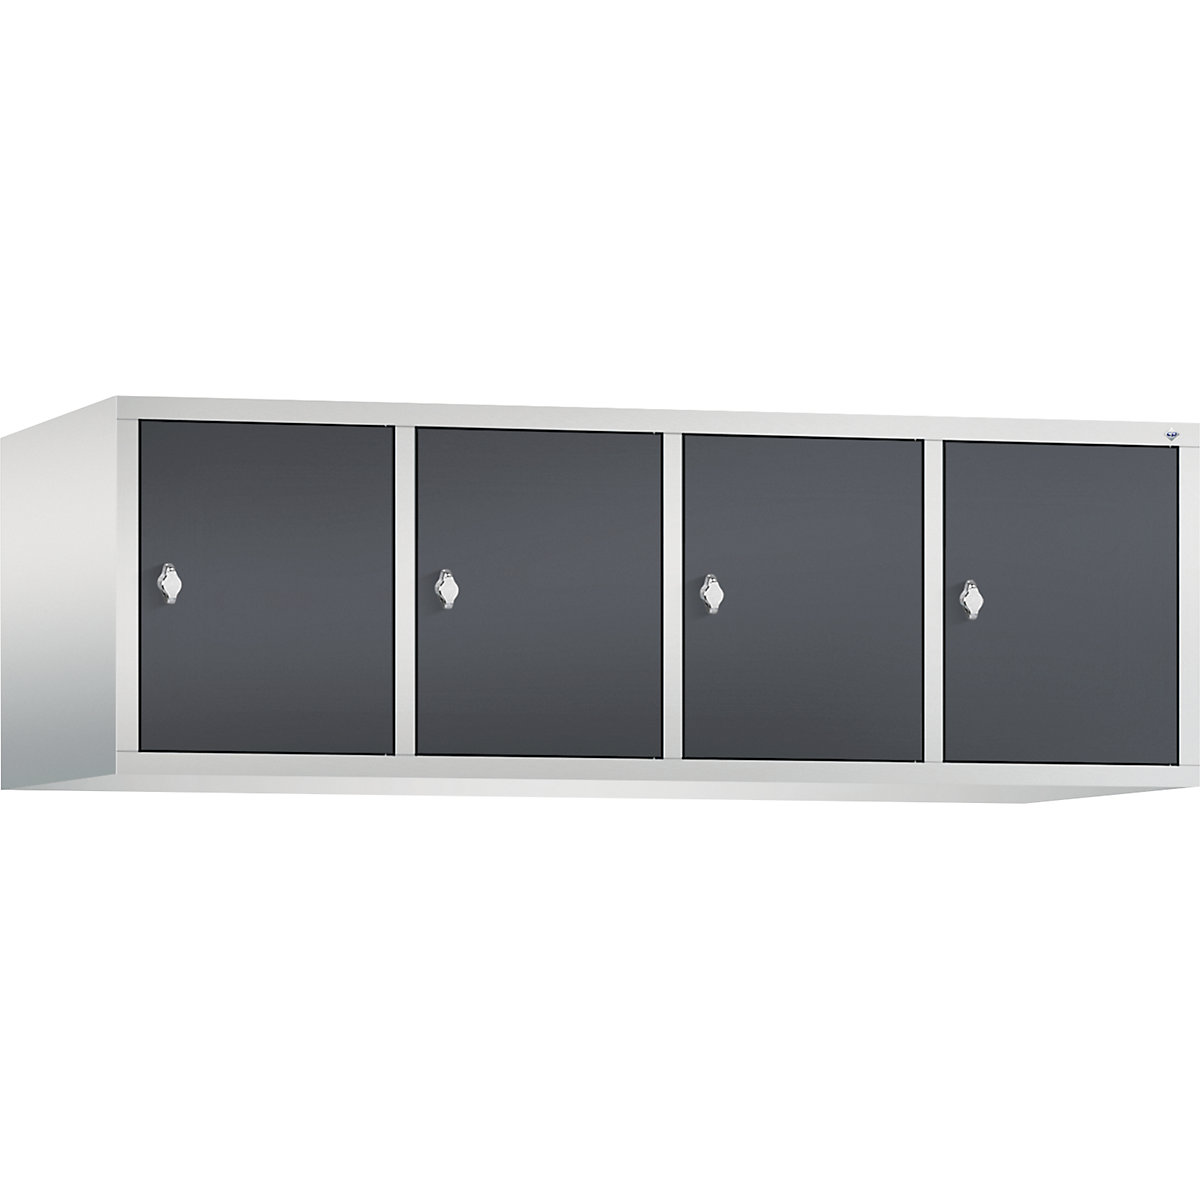 C+P – Altillo CLASSIC, 4 compartimentos, anchura de compartimento 400 mm, gris luminoso / gris negruzco